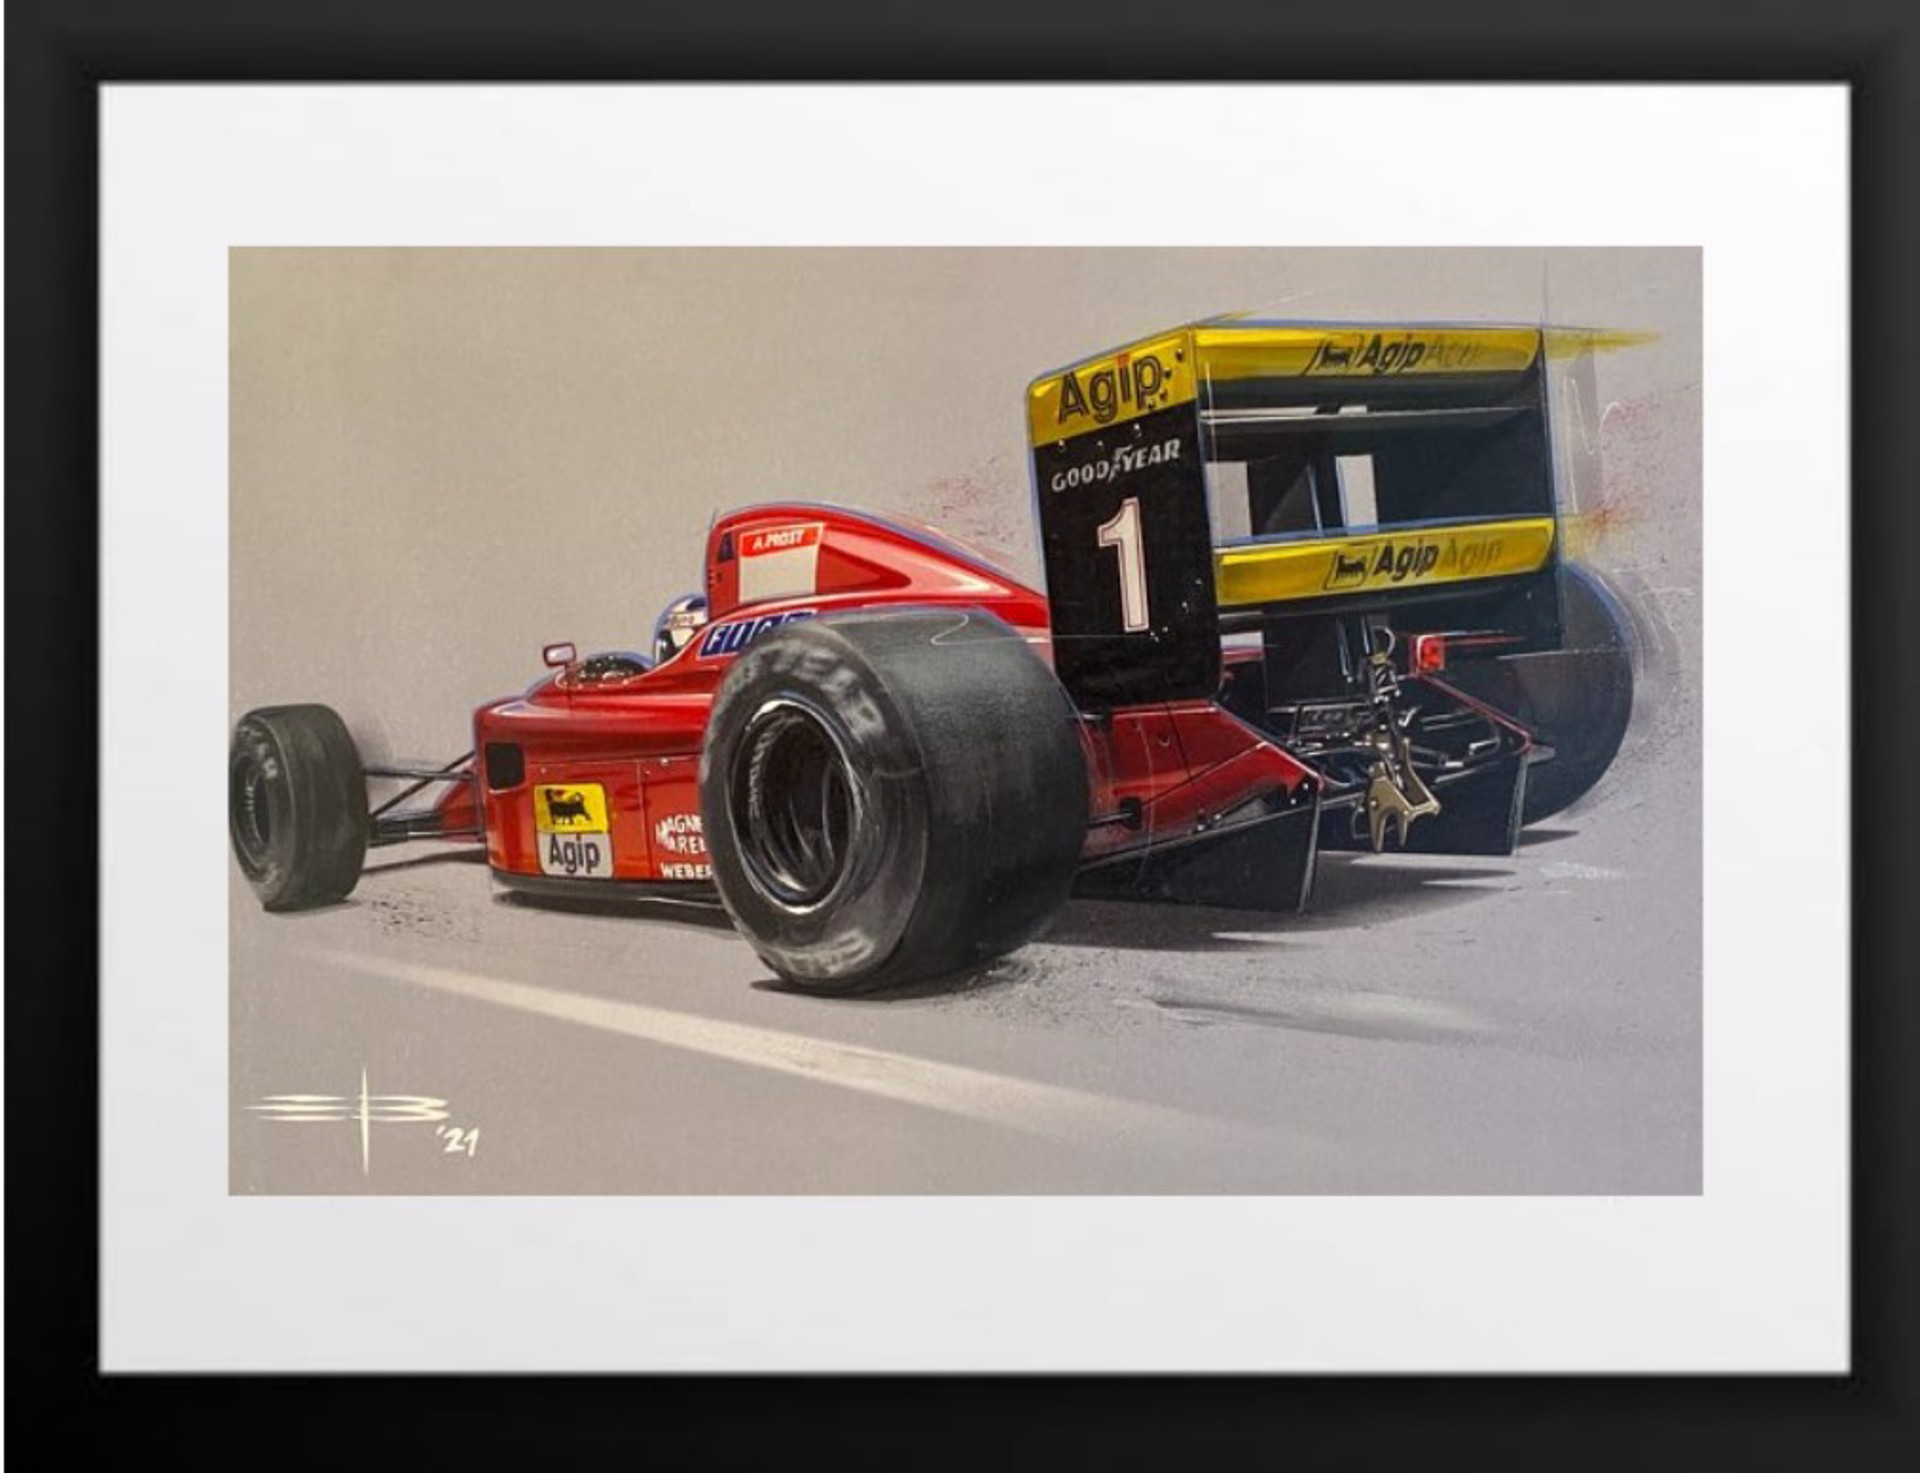 "Formula 1 Ferrari" by Emile Bouret